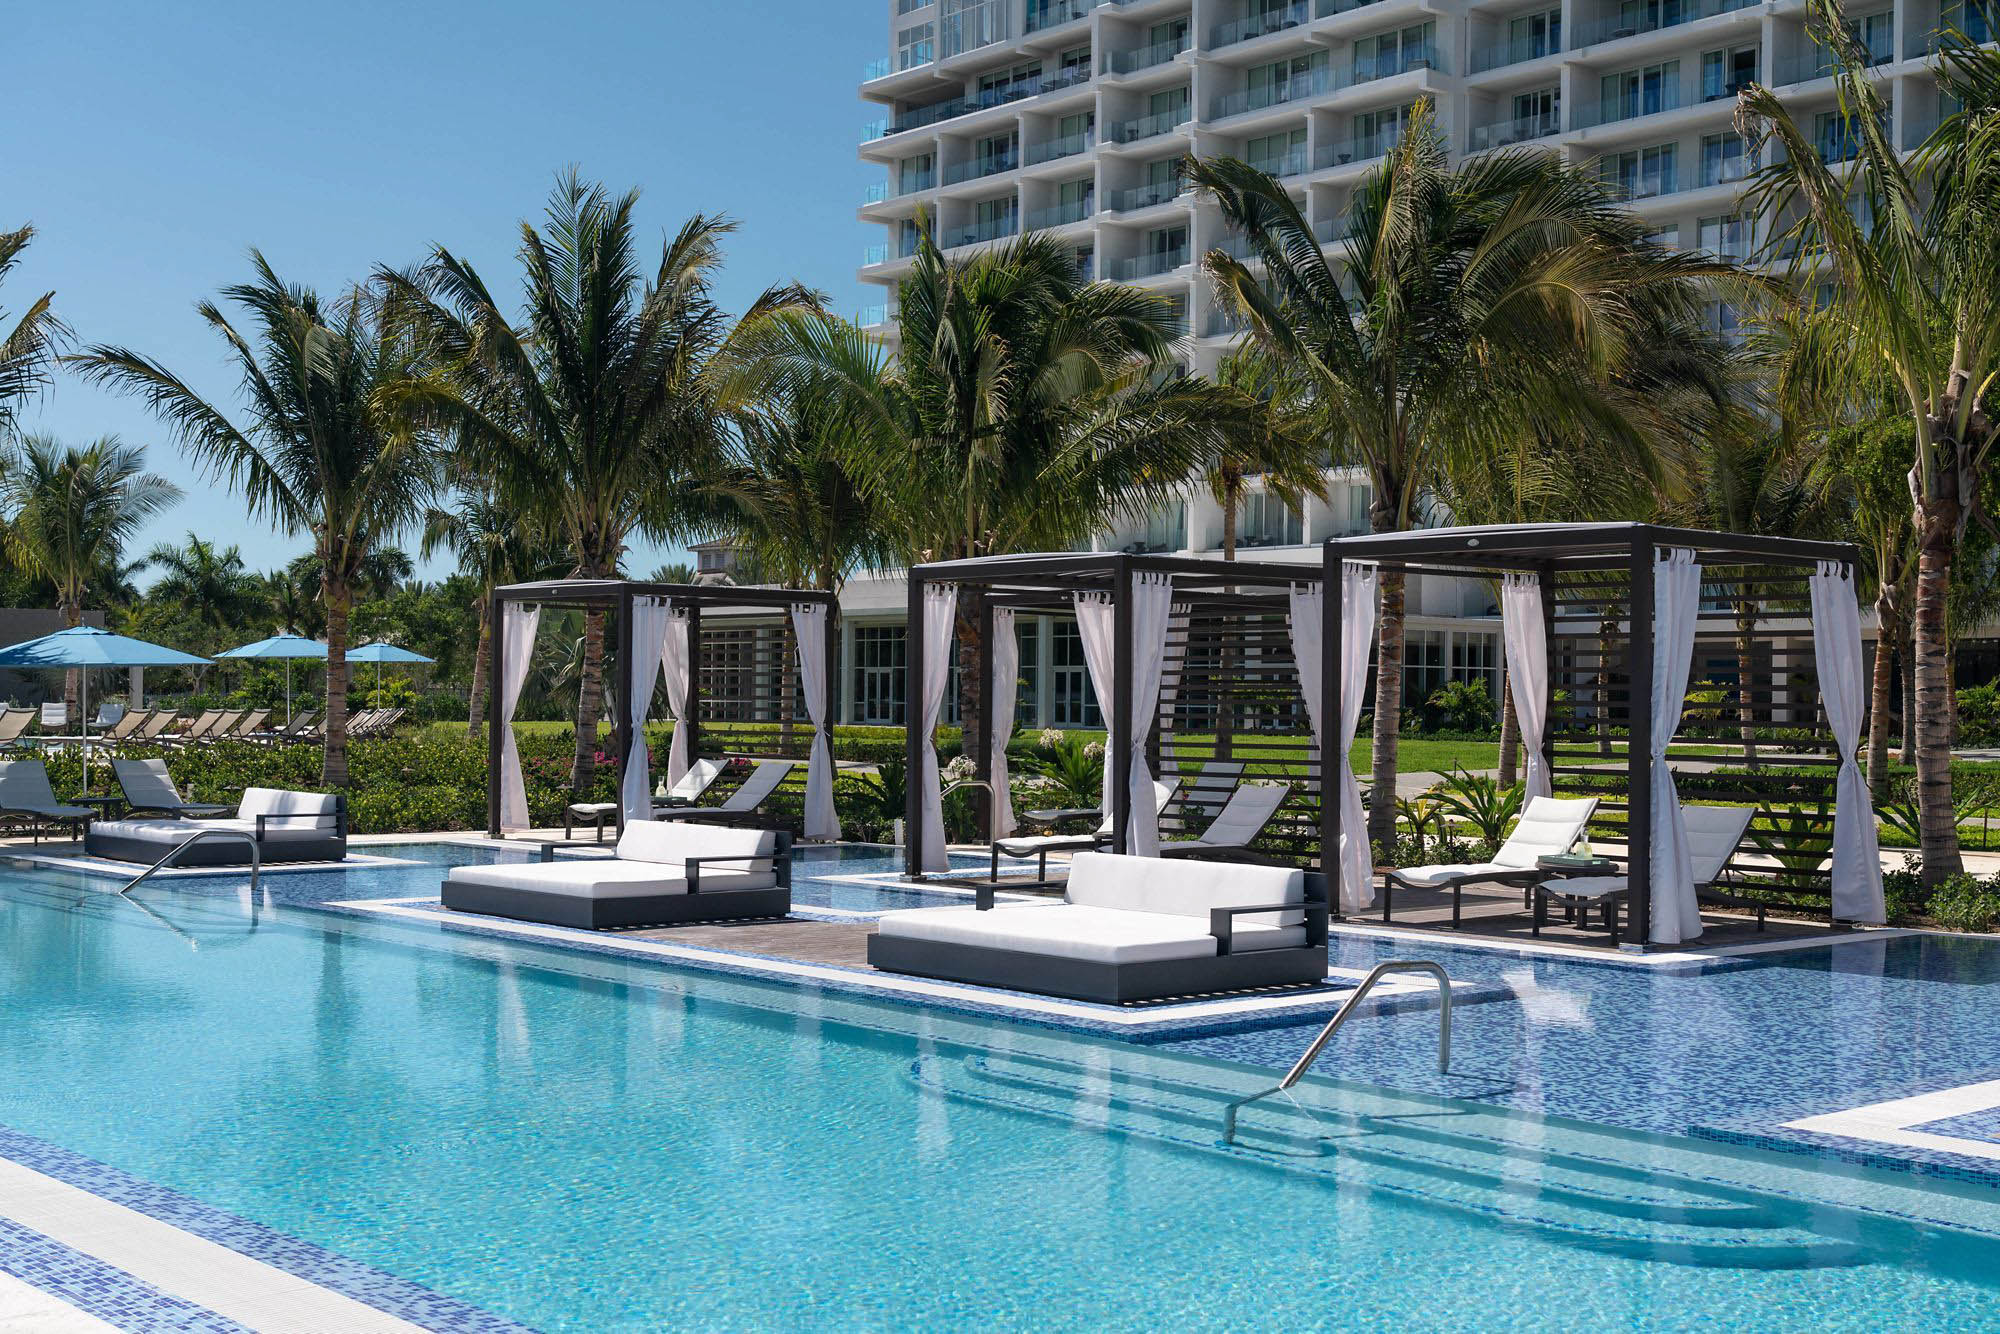 The Ritz-Carlton, Turks & Caicos Resort - Providenciales, Turks and Caicos Islands - Pool Cabanas